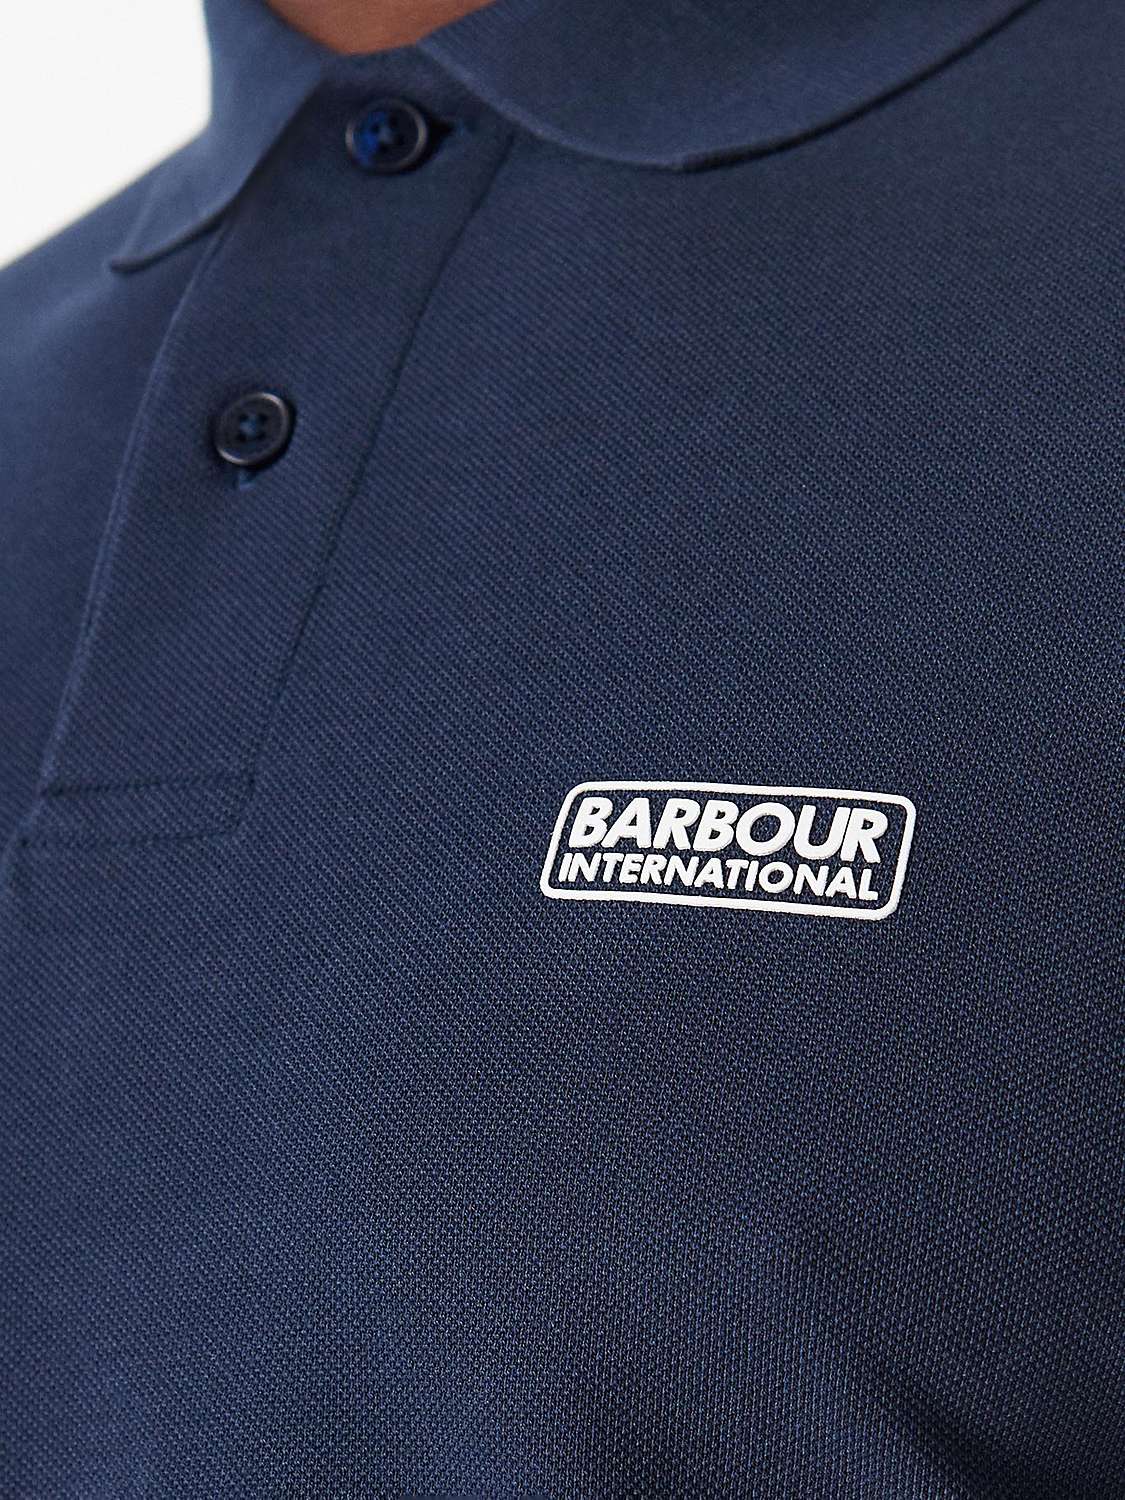 Buy Barbour International Essential Polo Shirt Online at johnlewis.com